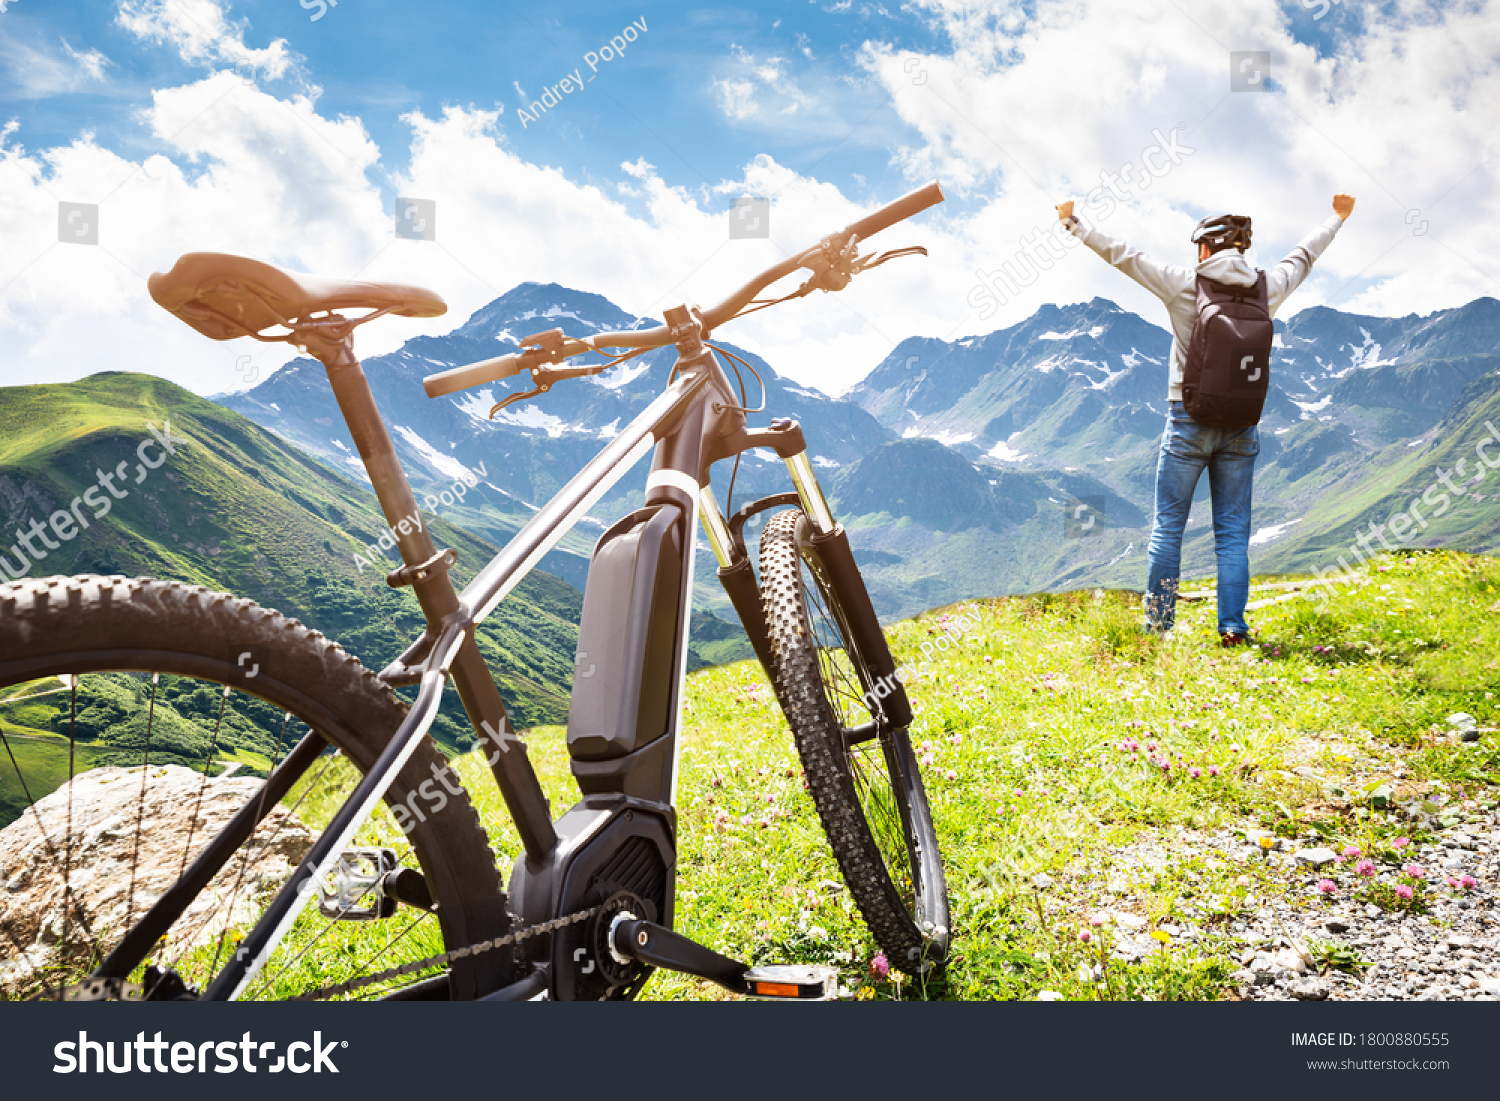 Mountain E Bike In Austria. Ebike Bicycle #1800880555